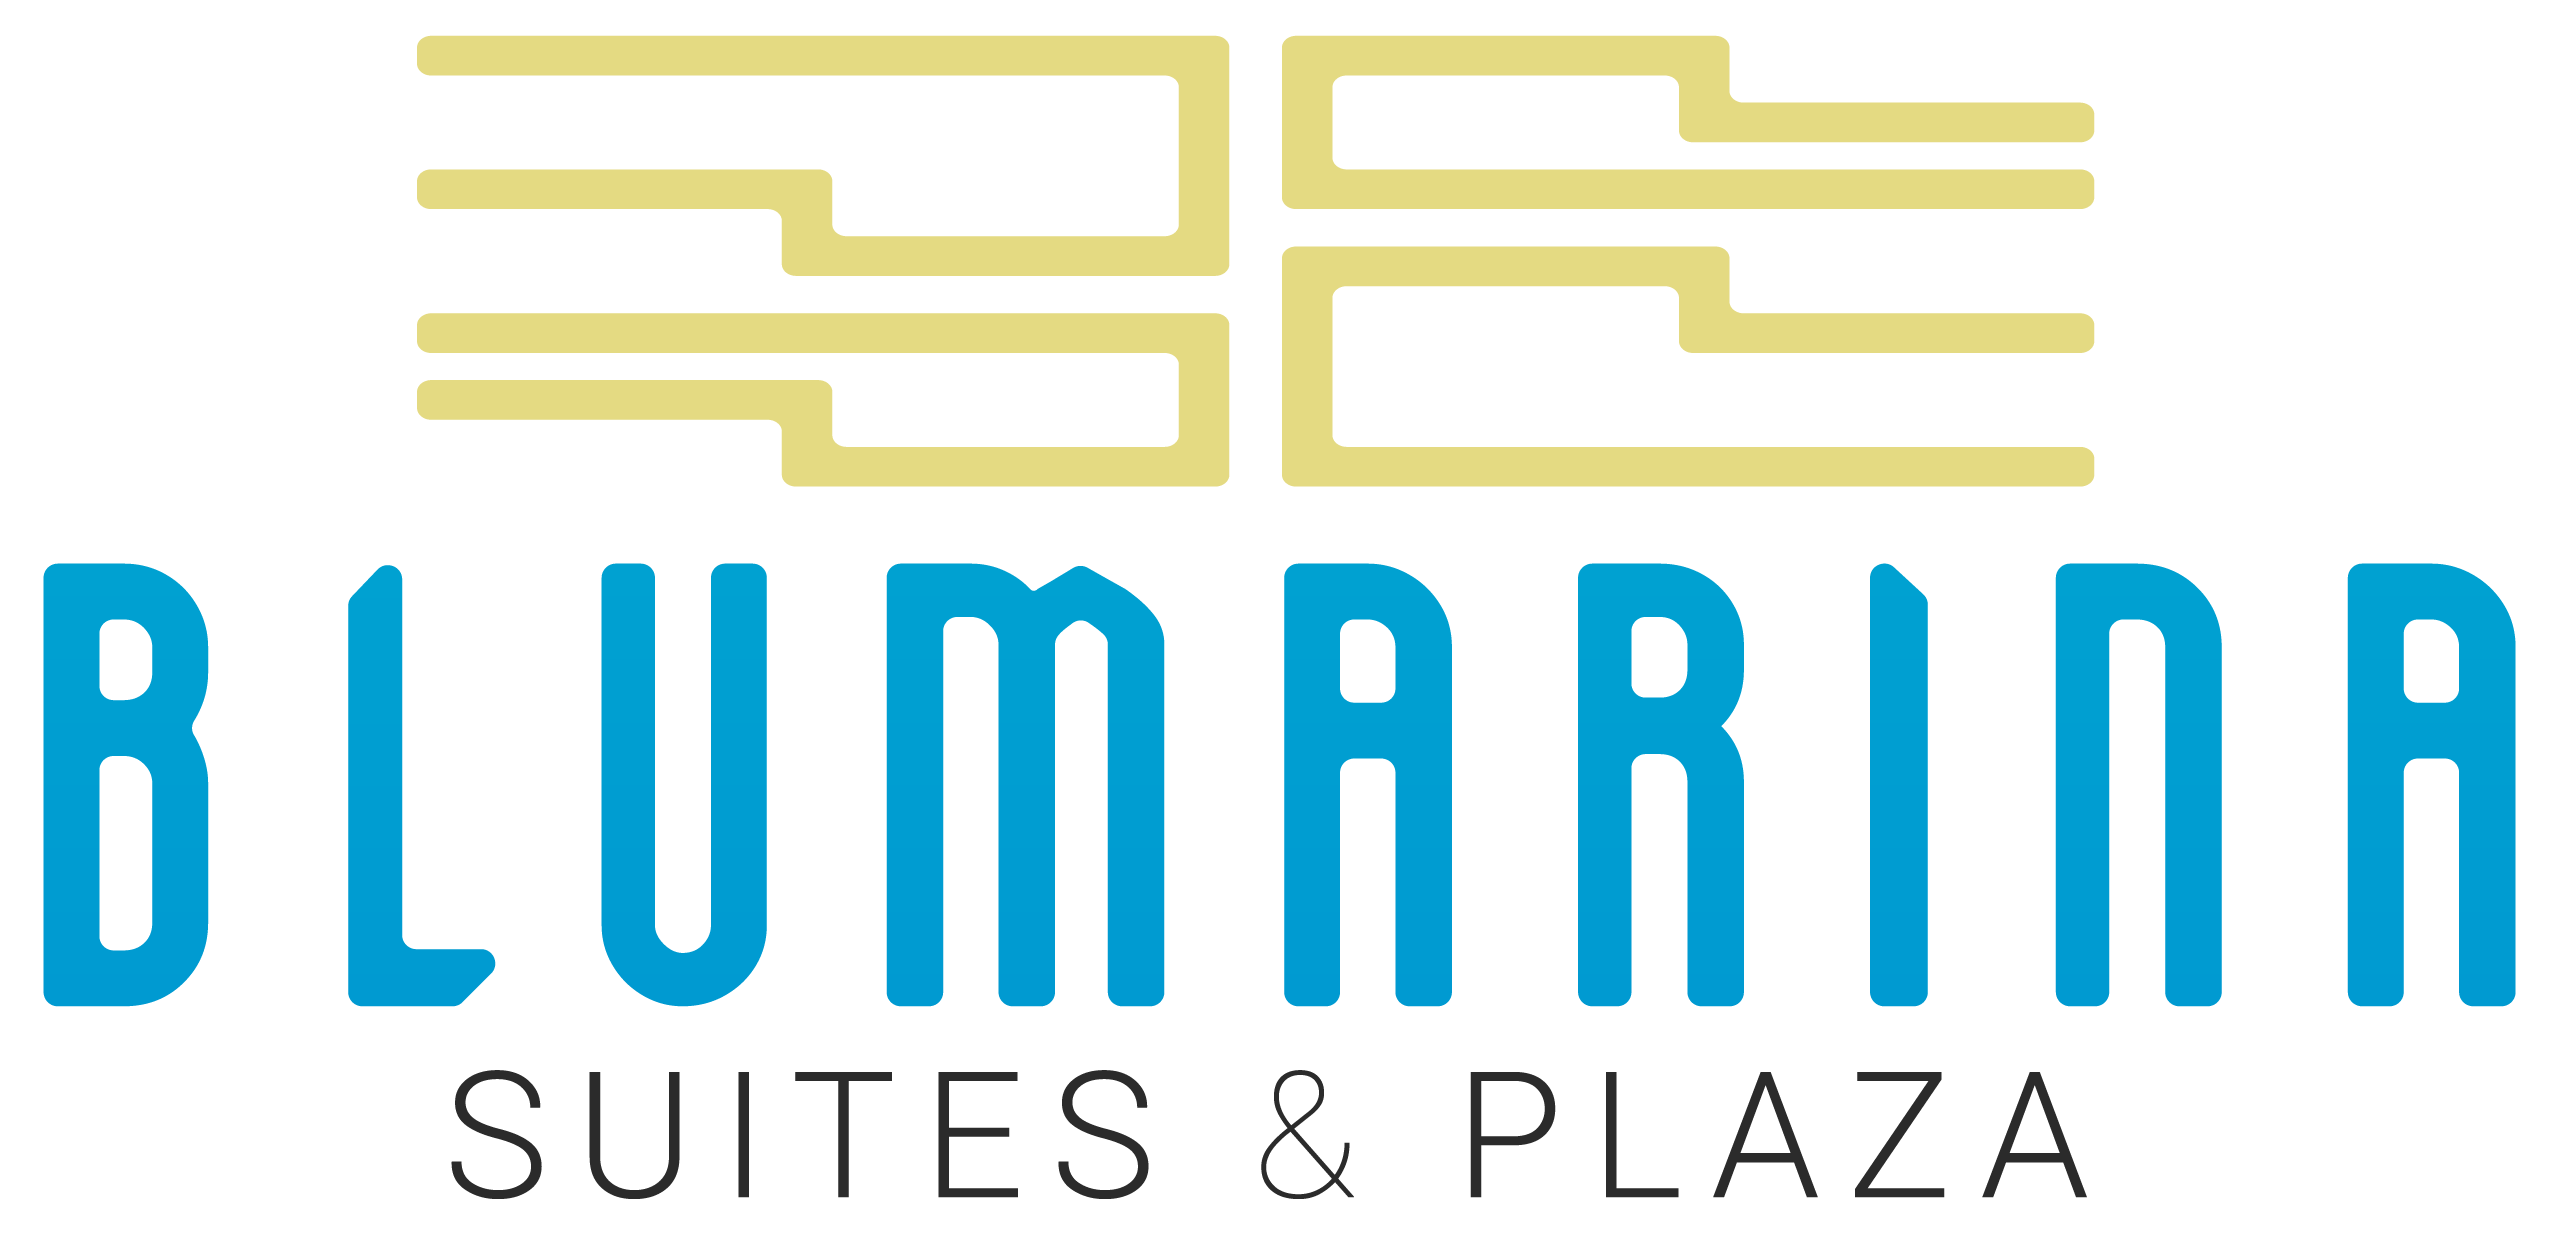 Blumarina Suites & Plaza